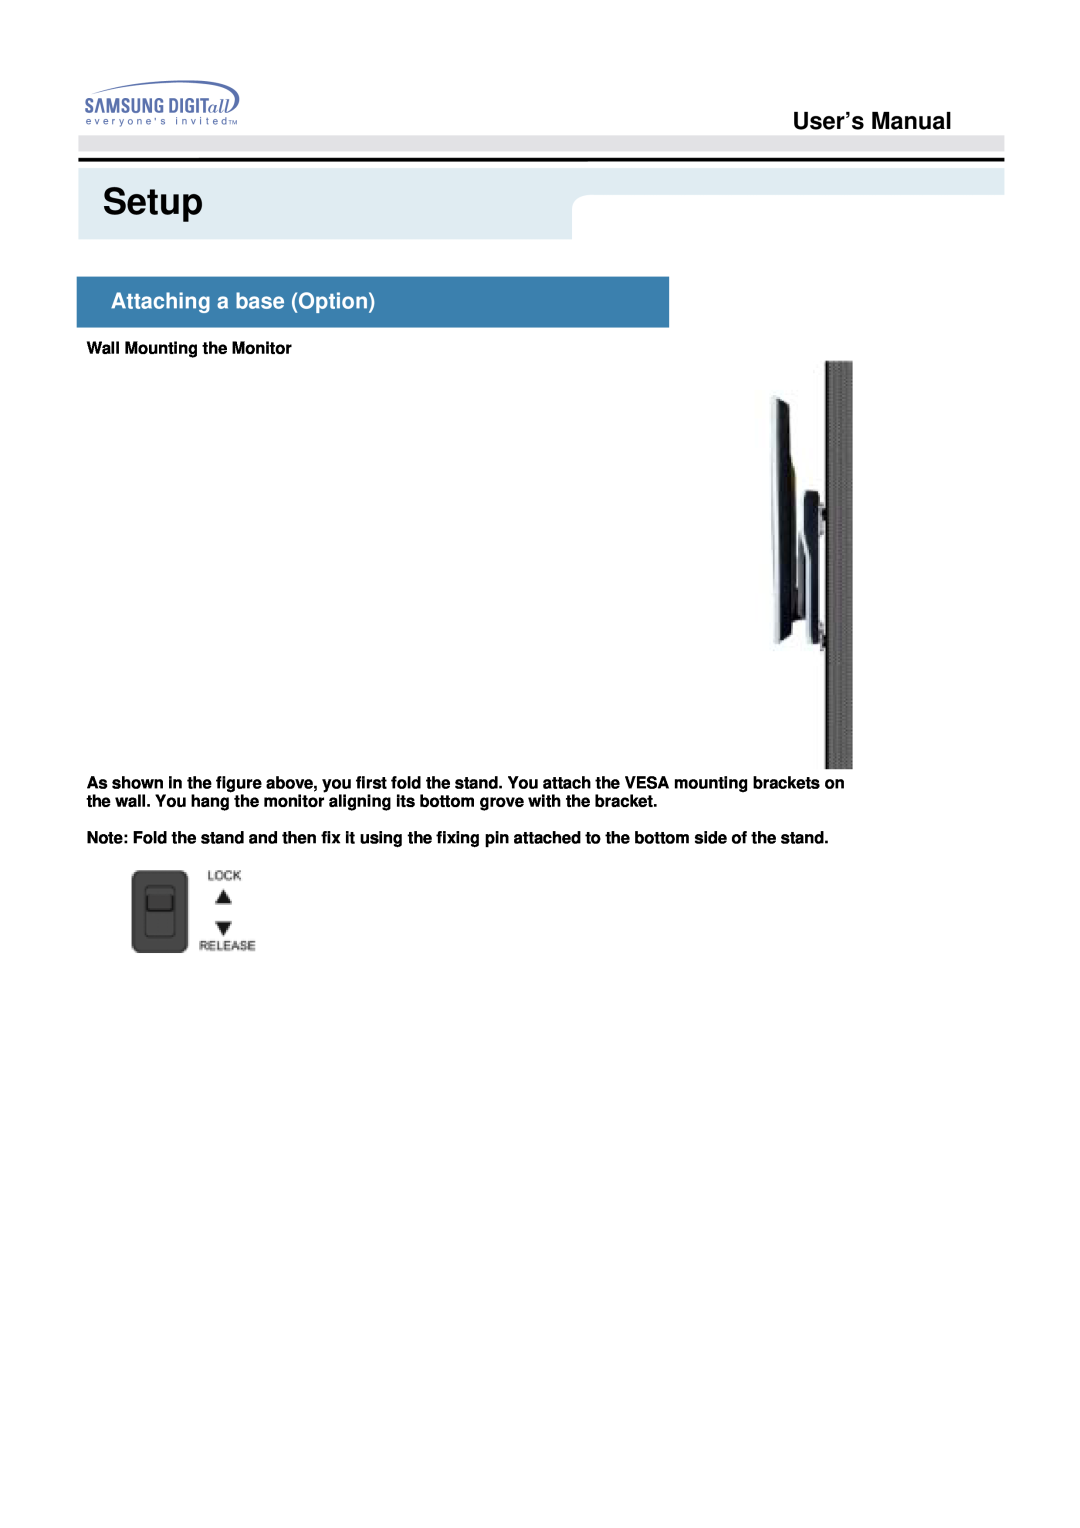 Samsung 192B, 192T manual Attaching a base Option, Setup, User’s Manual, Wall Mounting the Monitor 